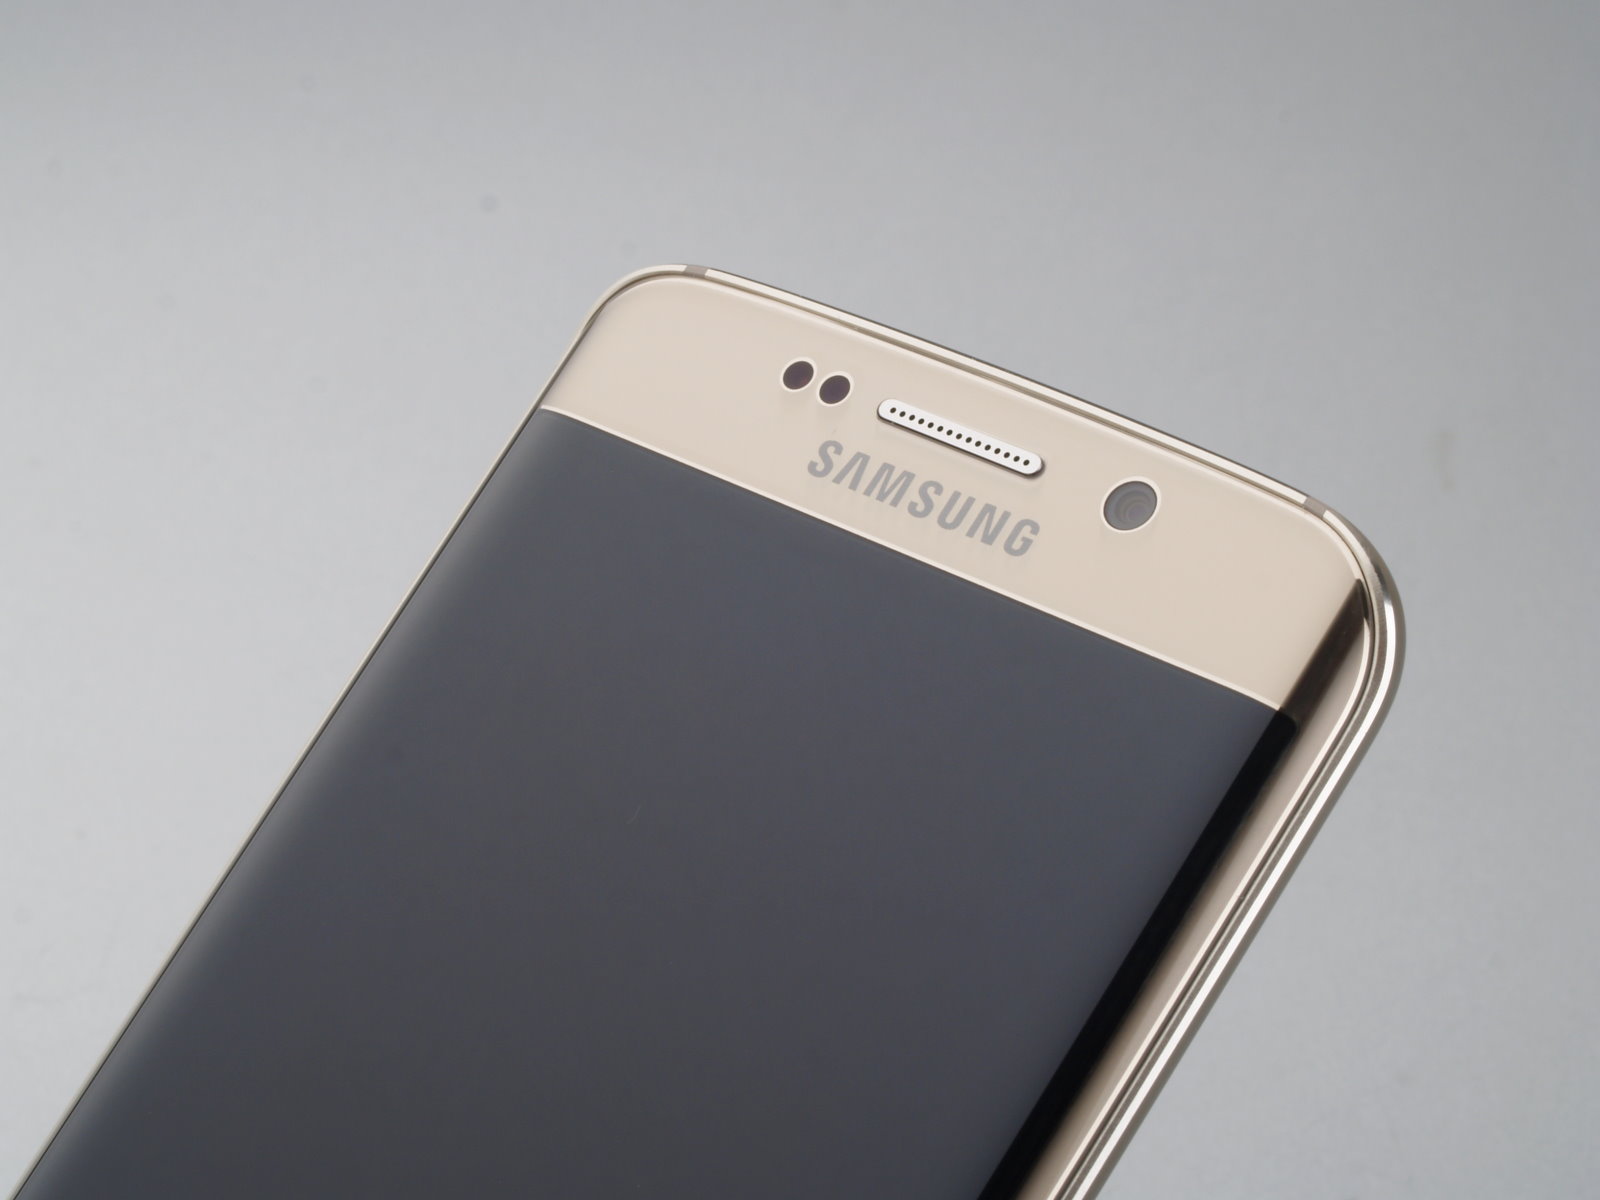 Samsung presents the Galaxy S6 smartphone